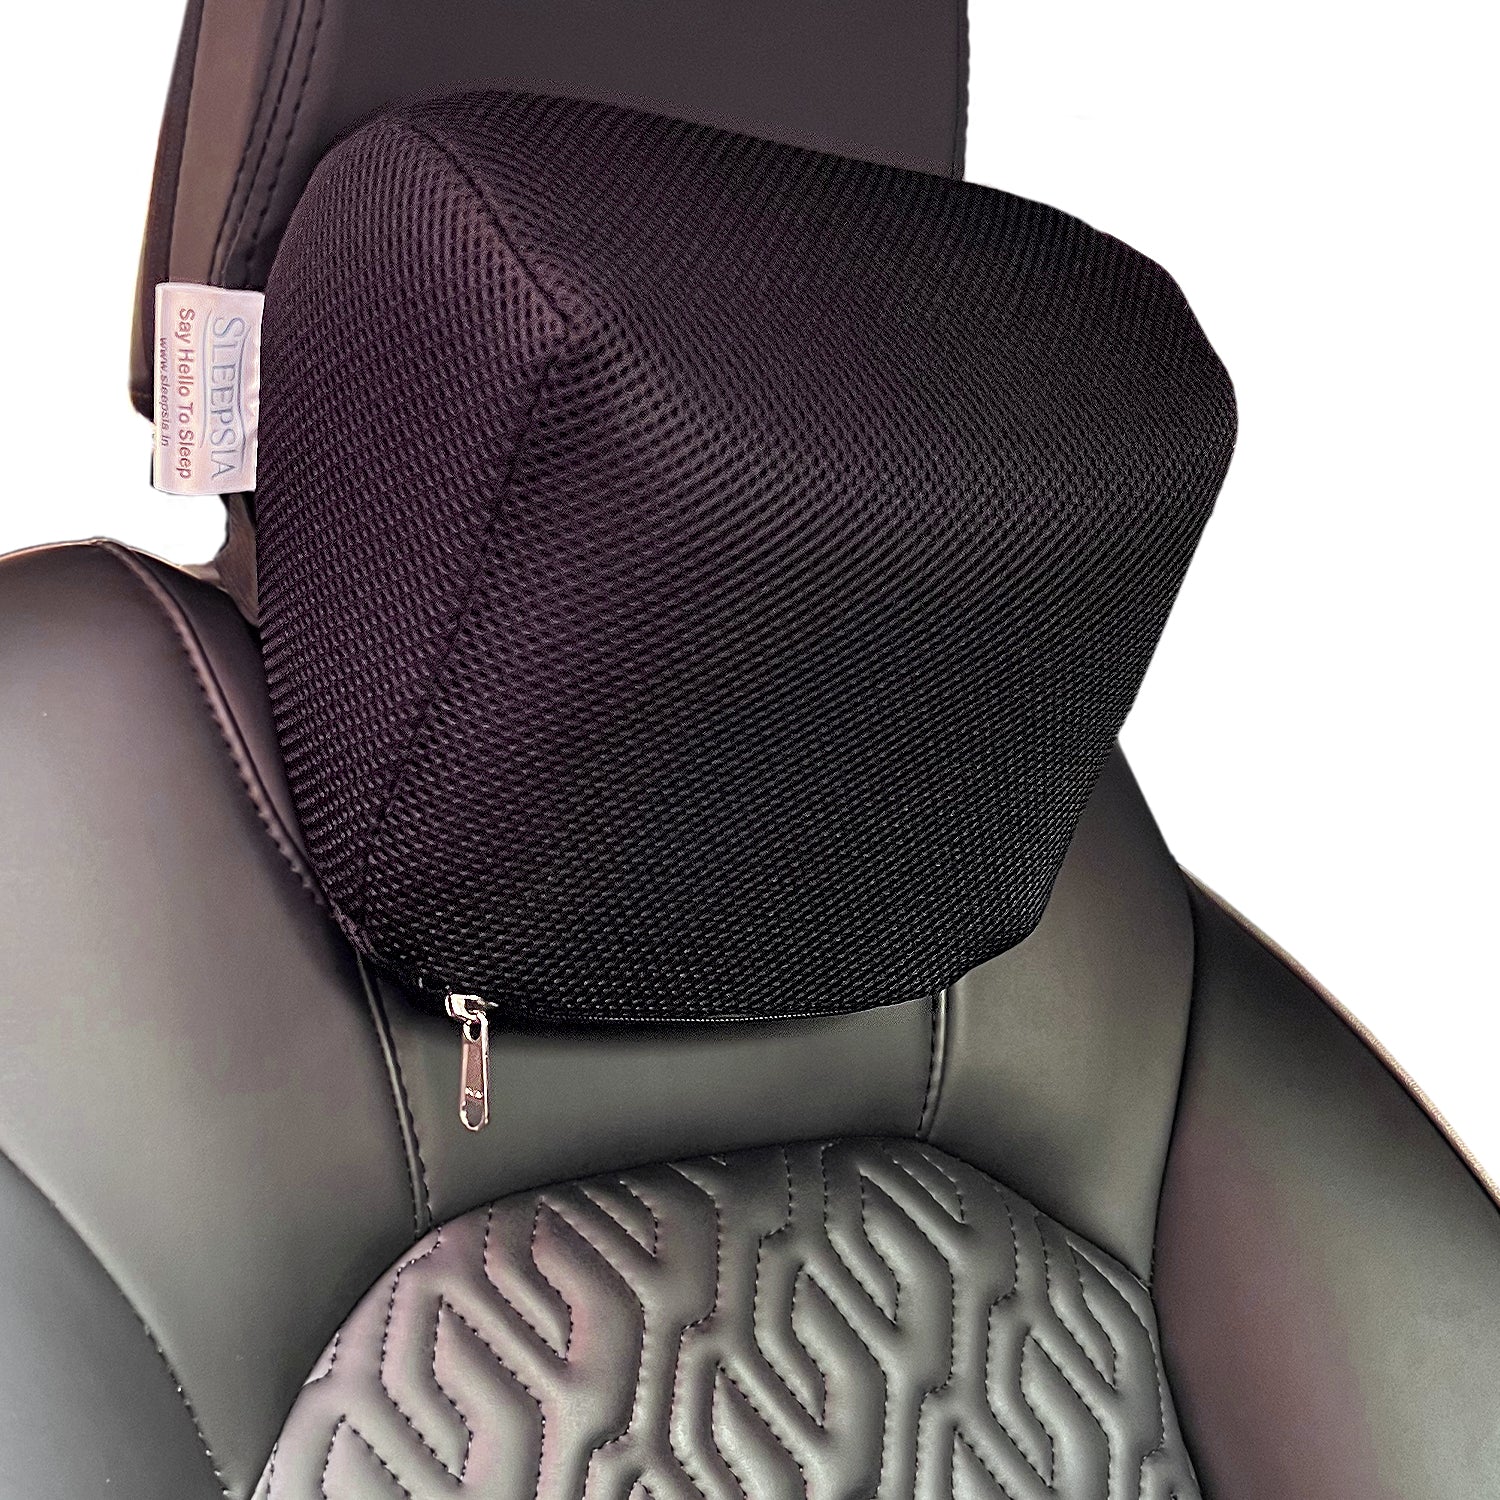 Car Headrest Pillow Car Seat Pillow Car Seat Headrest Pillow – Sleepsia  India Pvt Ltd